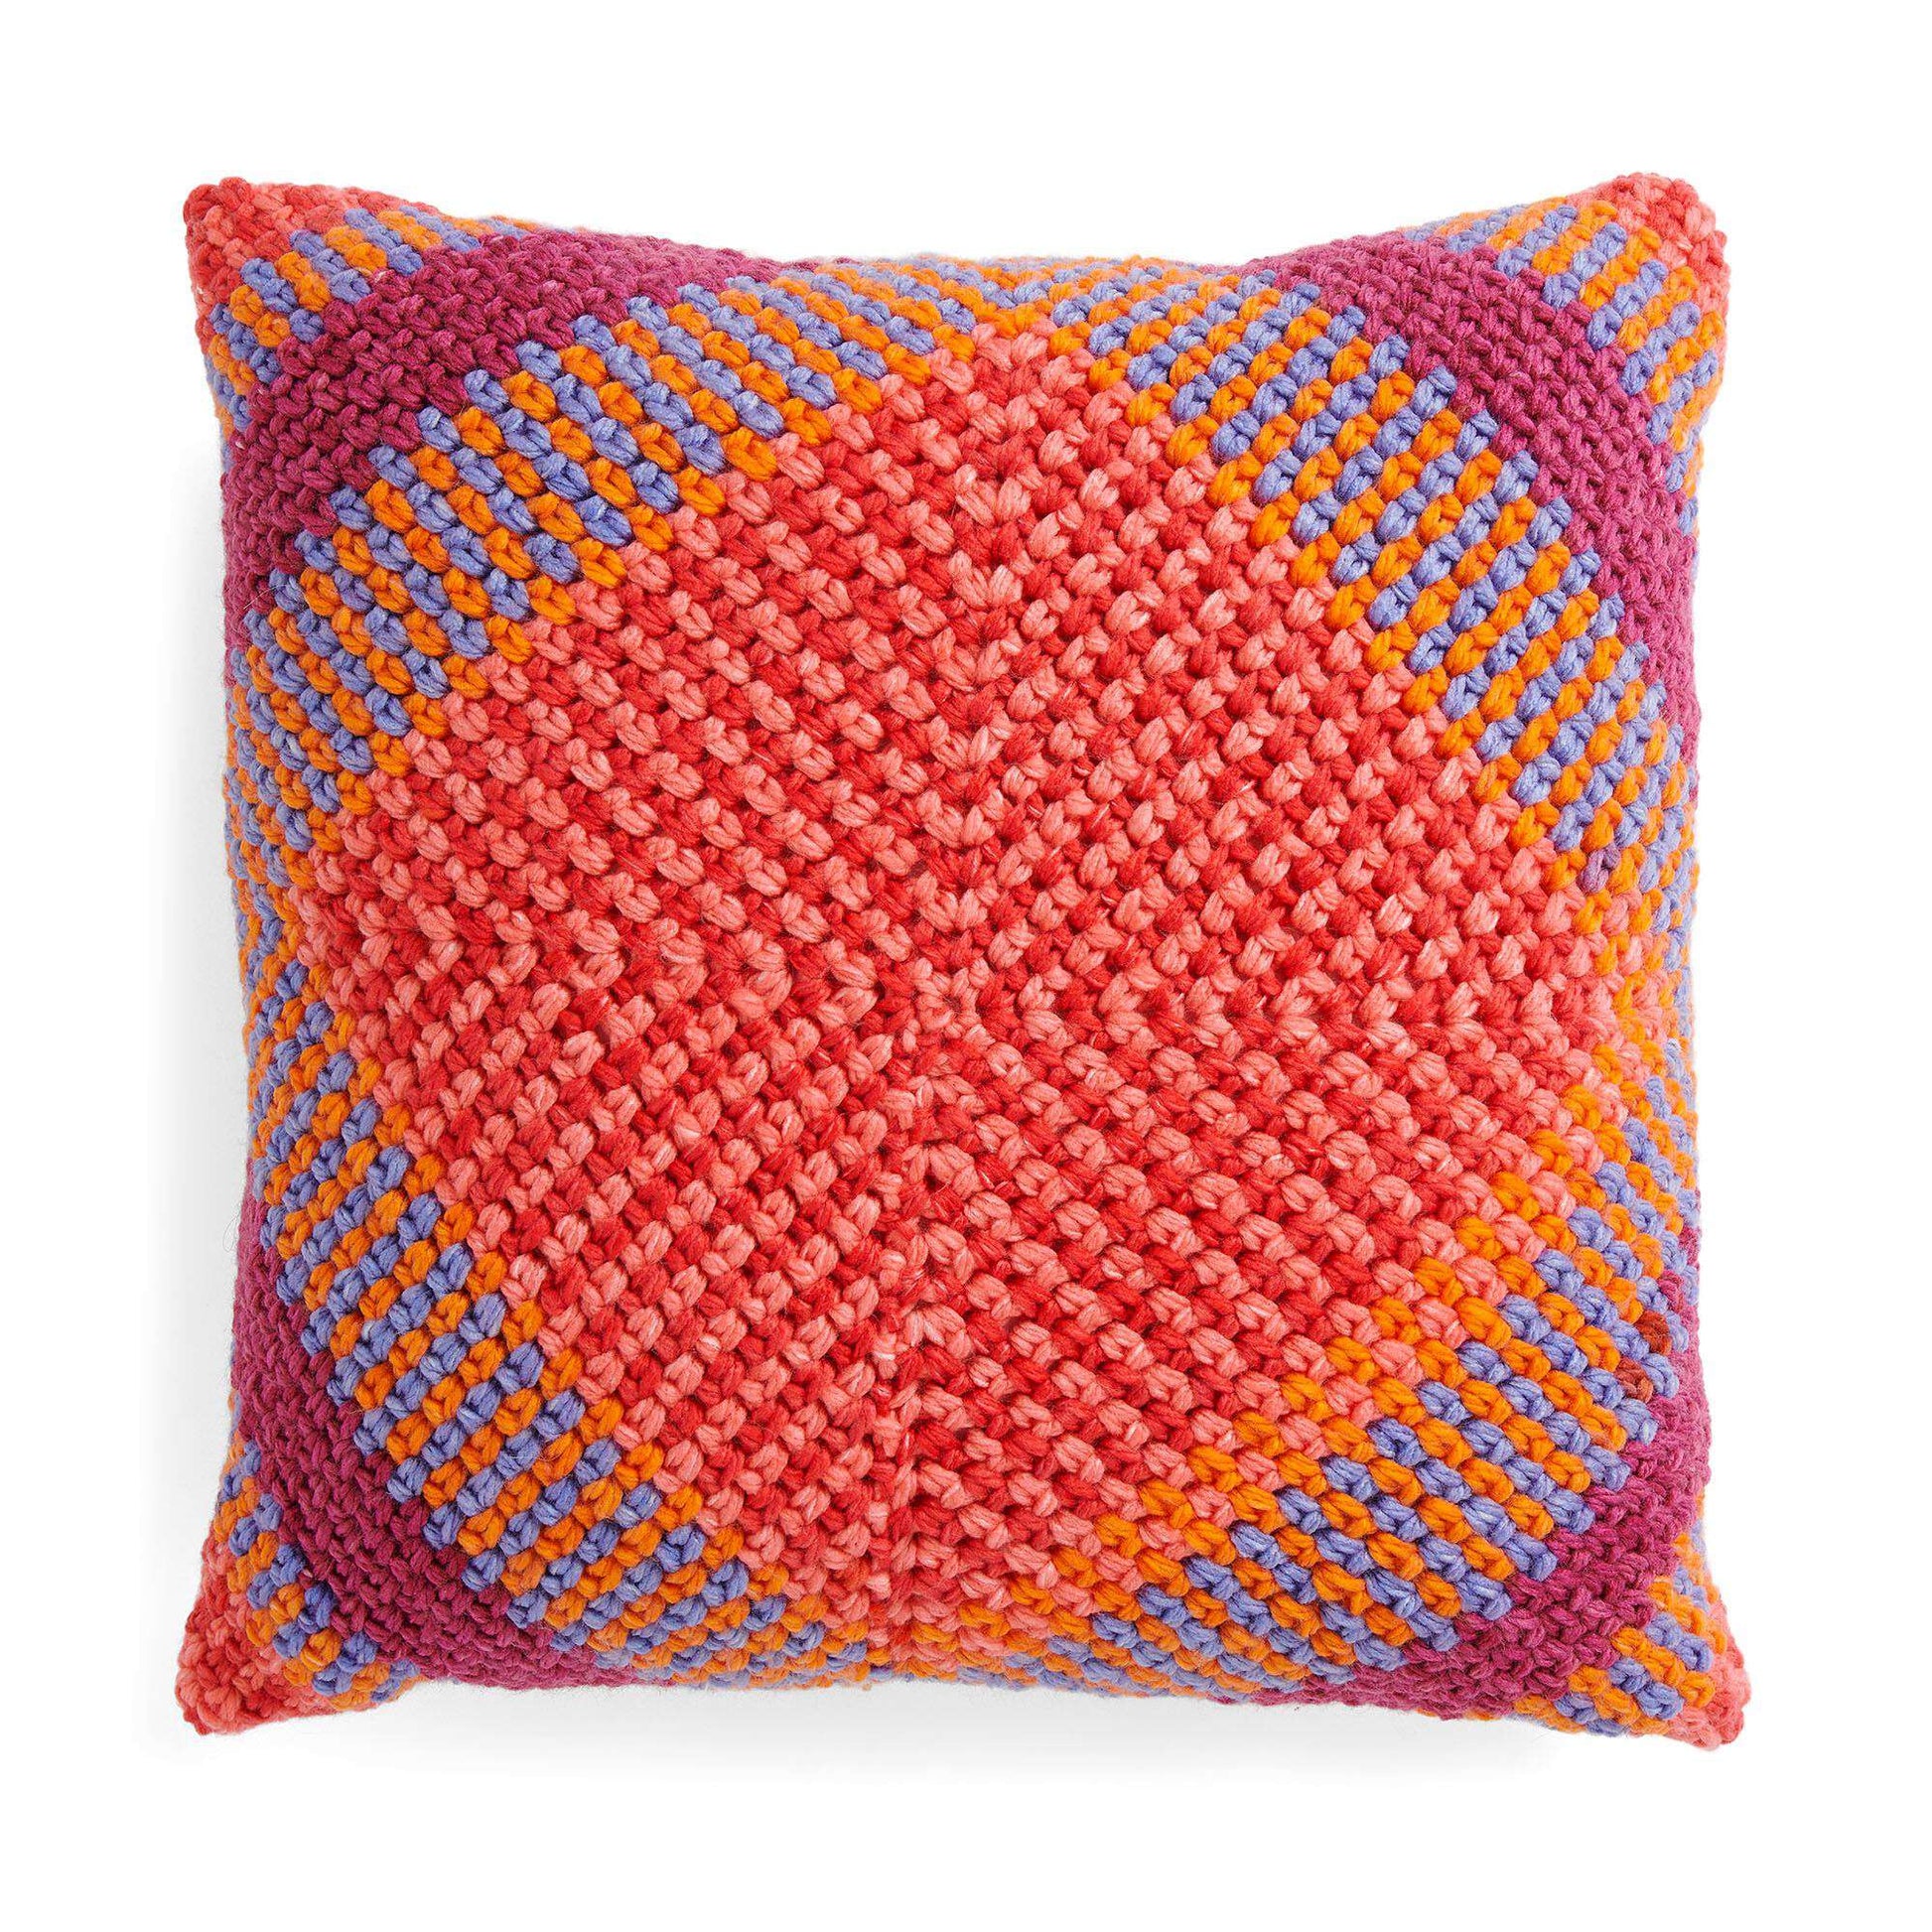 Free Caron Moss Motif Crochet Pillow Pattern